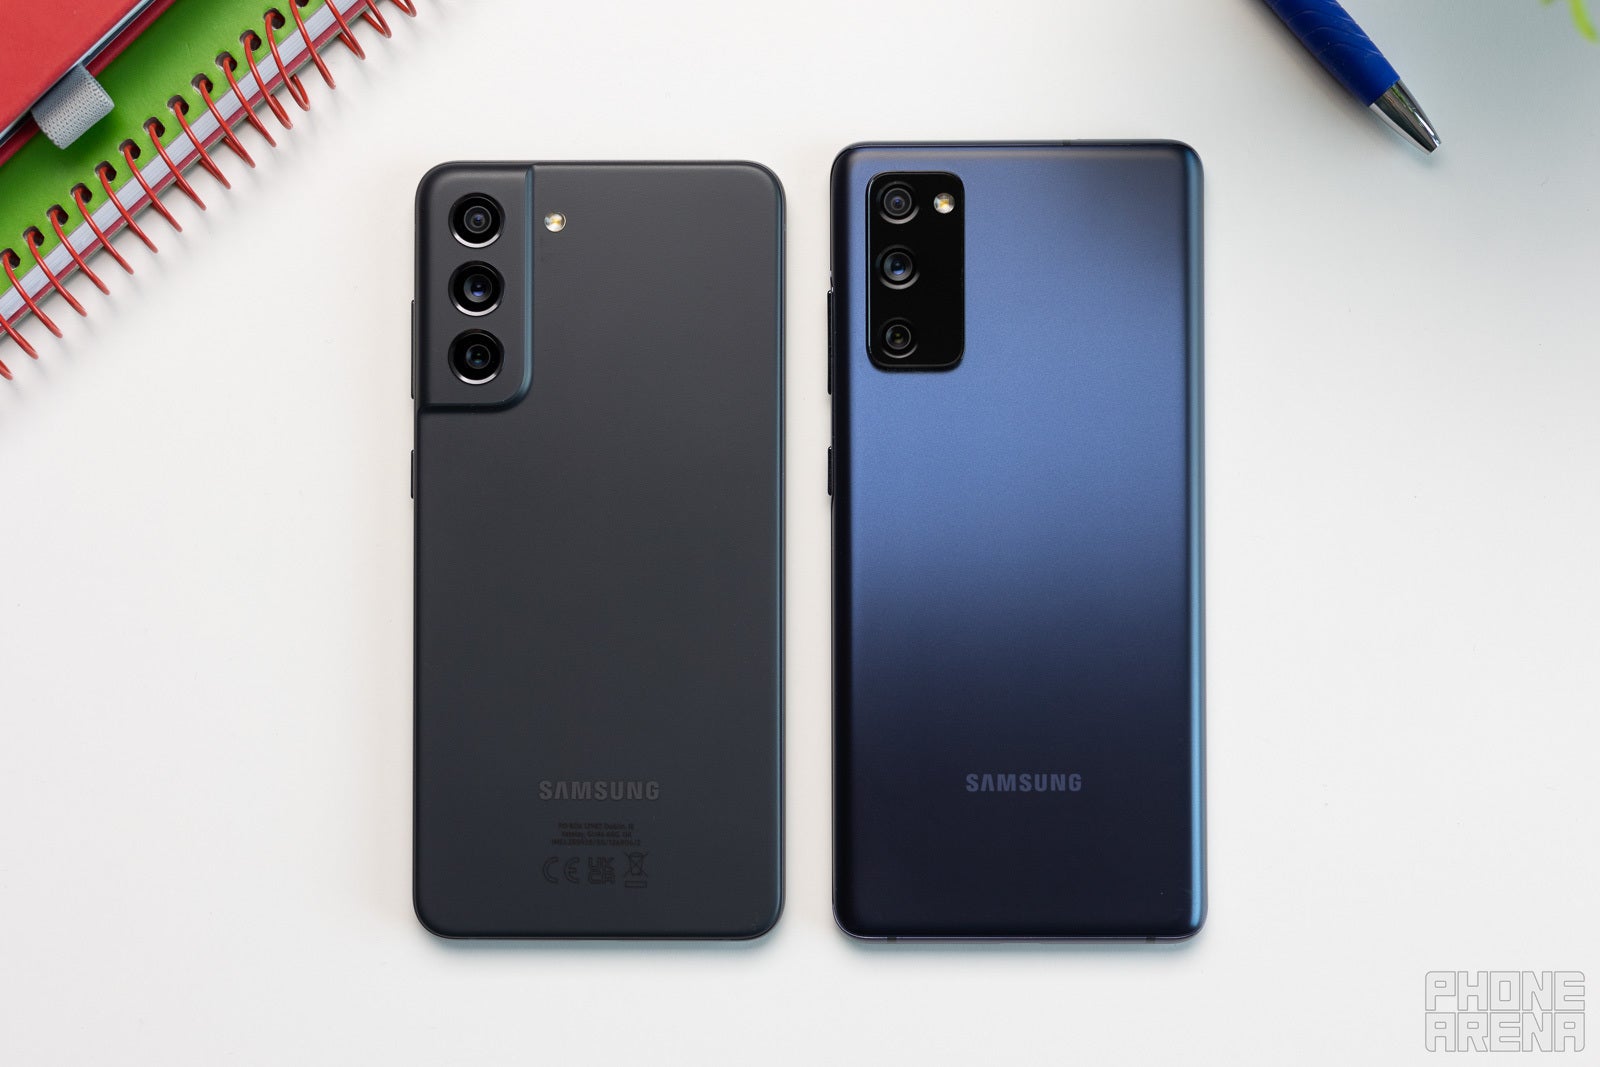 Samsung Galaxy S21 FE vs Galaxy S20 FE